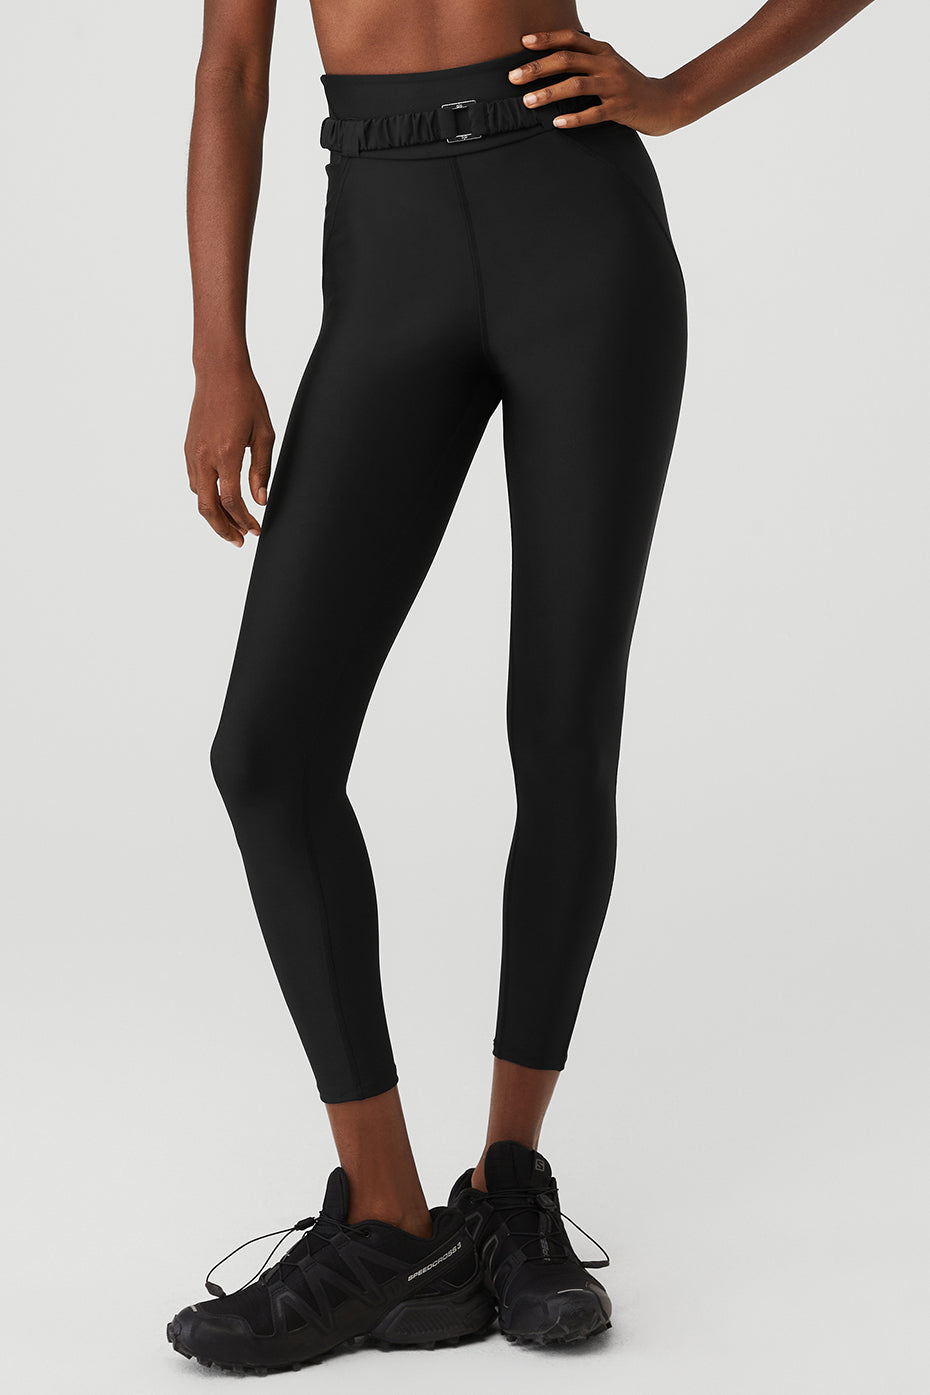 Umbra Sports Black Leggings L4240 Yoga Pants for Women